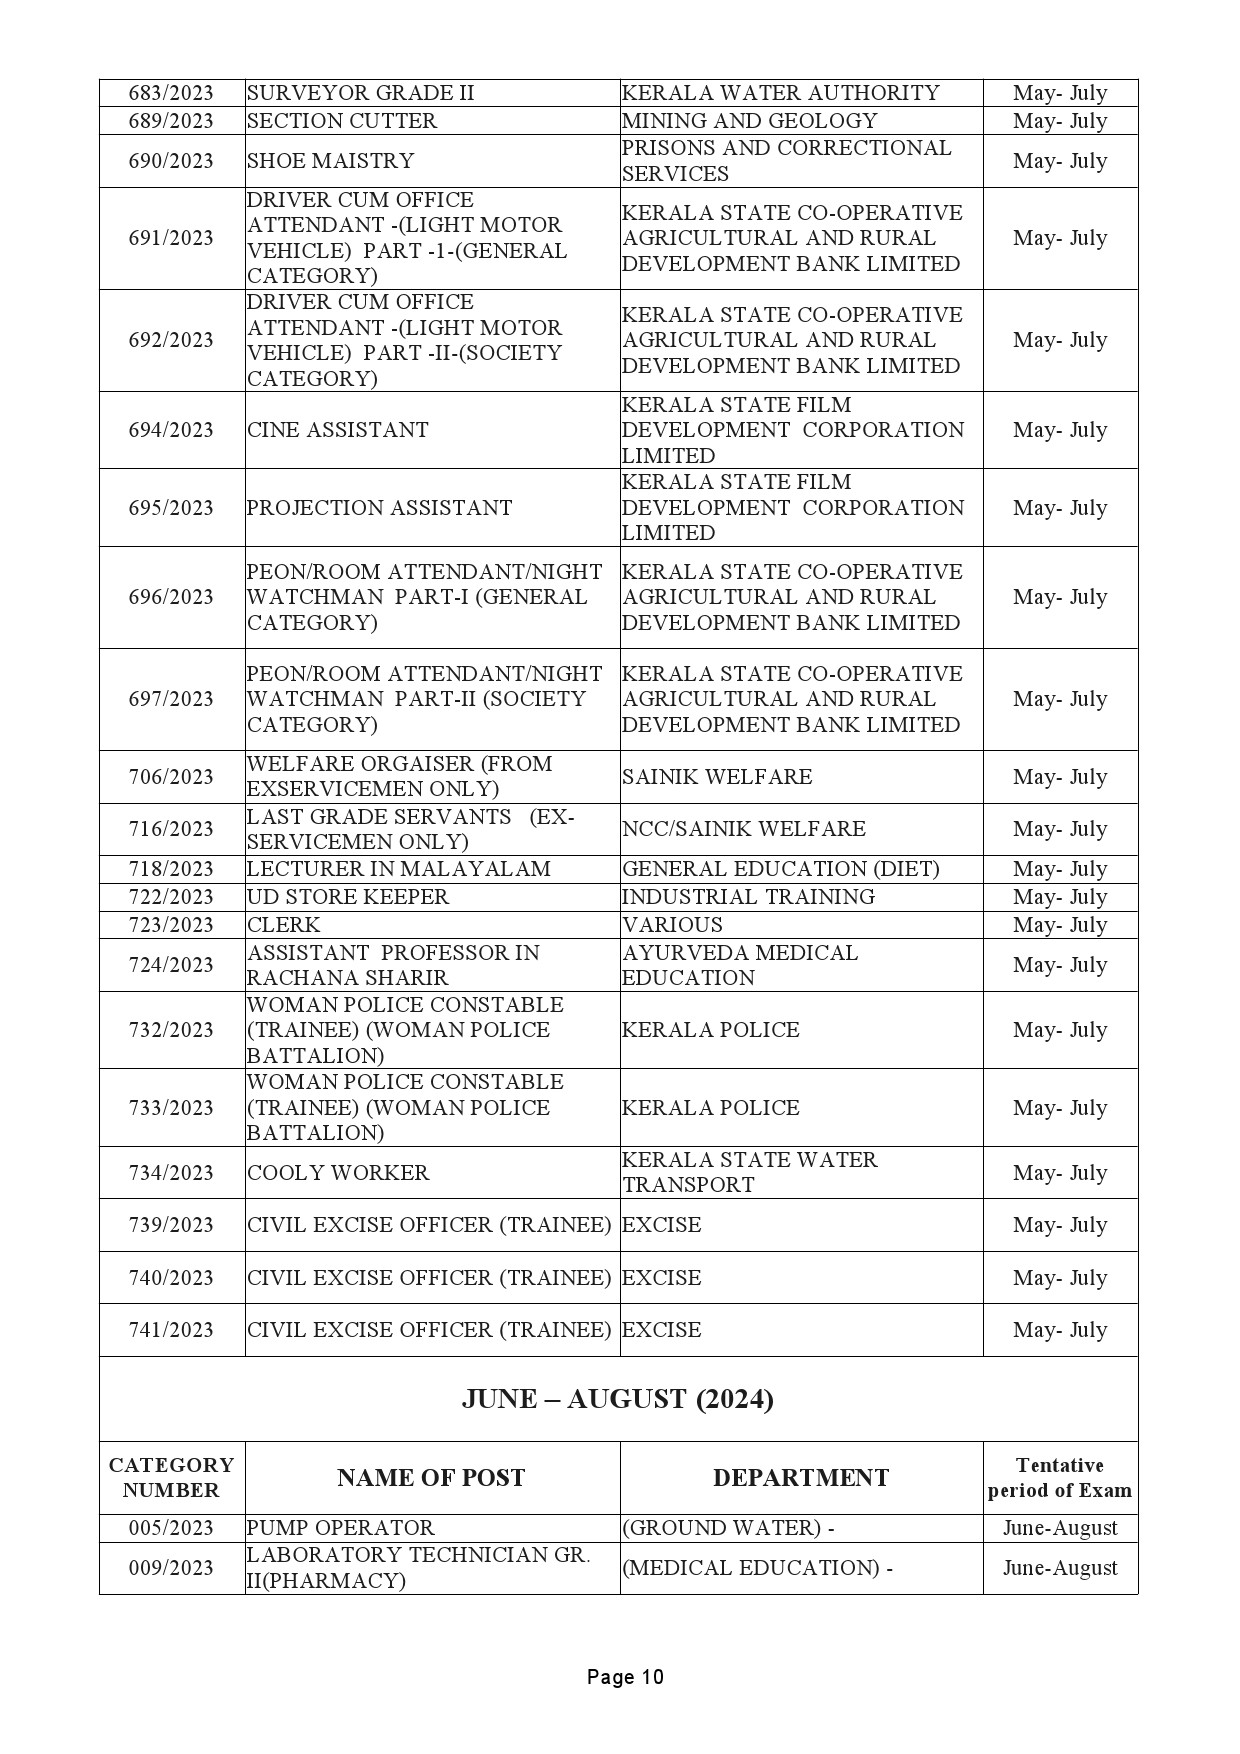 KPSC Tentative Exam Calendar 2024 - Notification Image 10